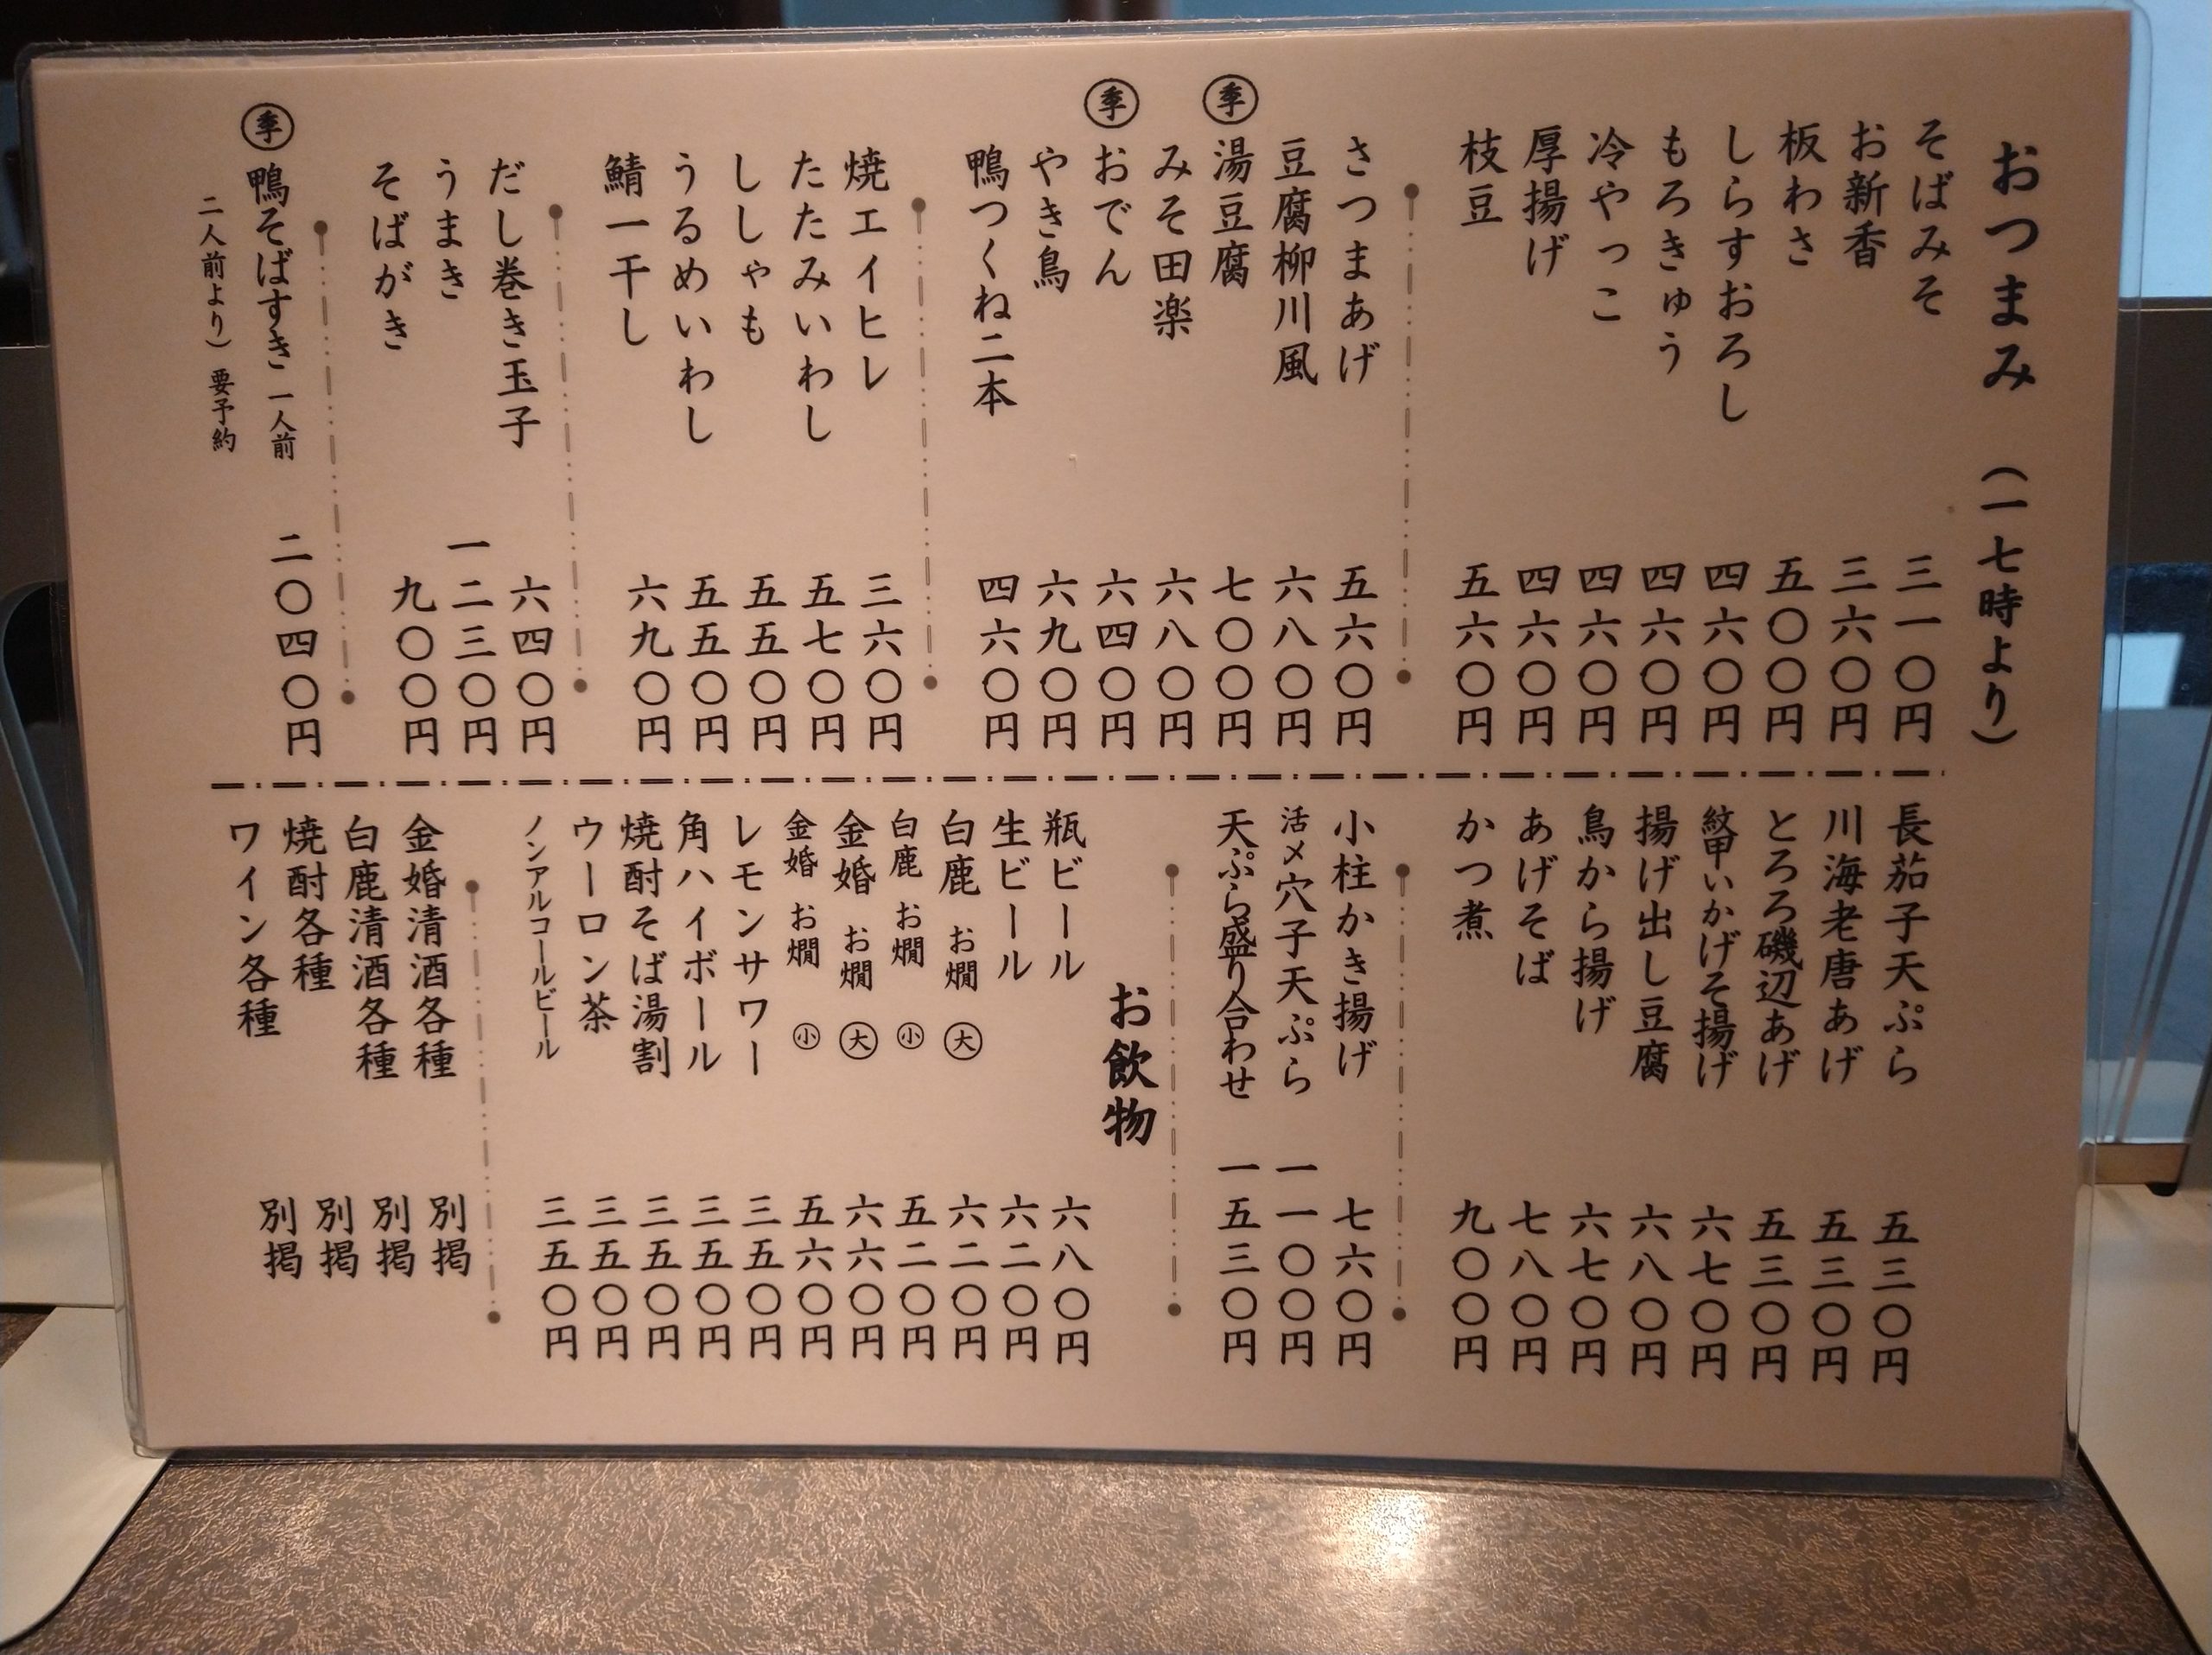 yabusen-kanda-menu-01